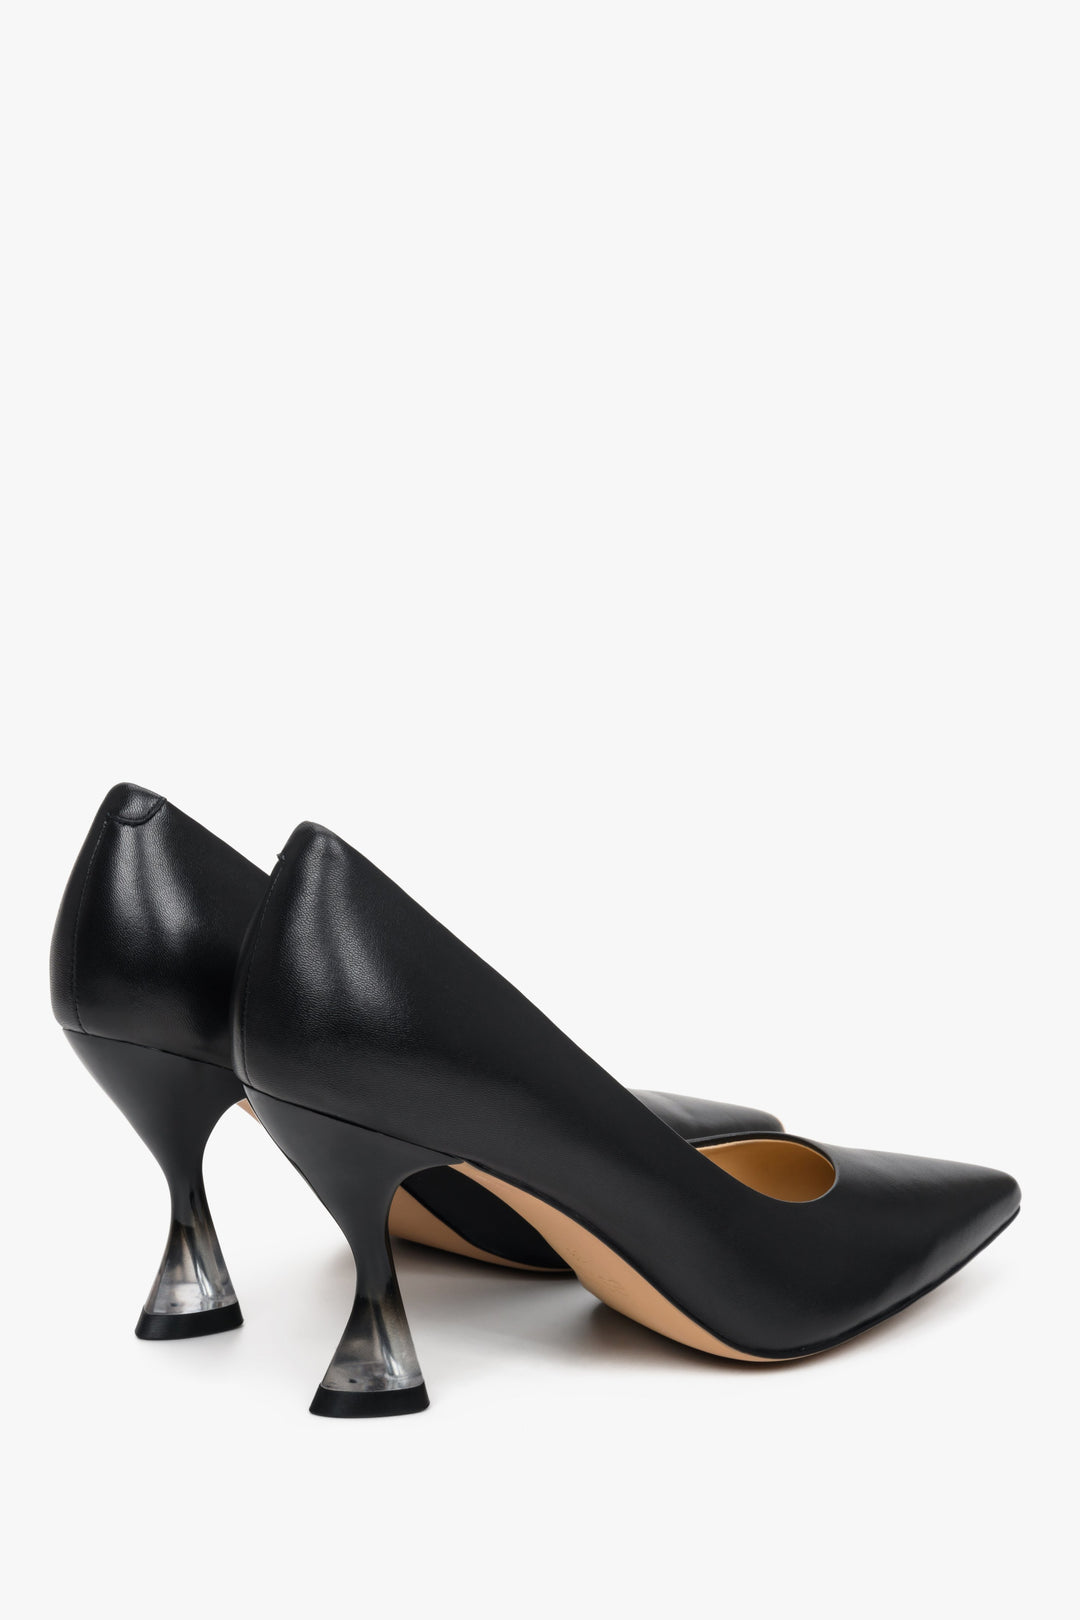 Elegant women's black high-heeled pumps by Estro - presentation of the shoe's heel.